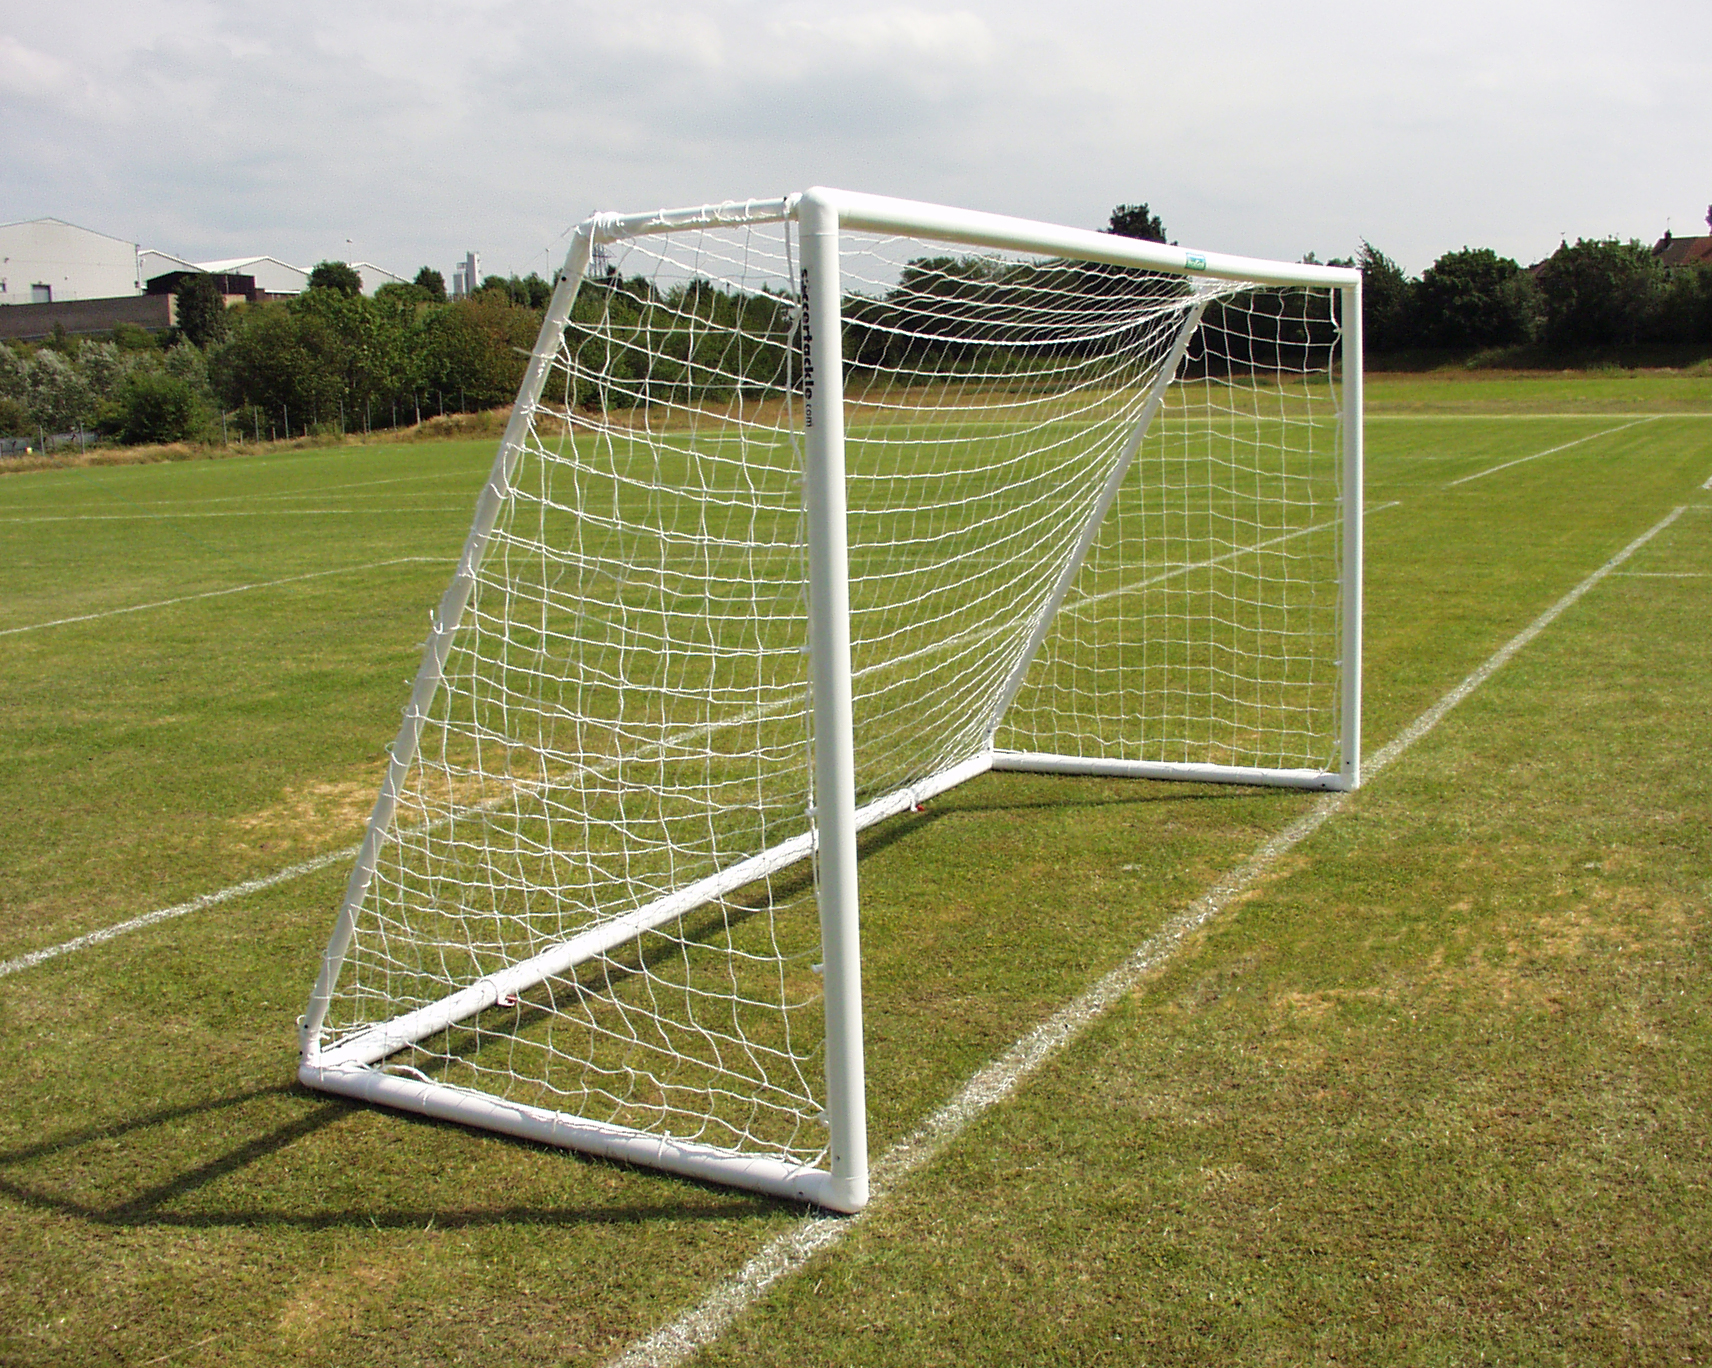 uPVC Mini Soccer Goal 12' x 6' - fits into 1.5m goal bag